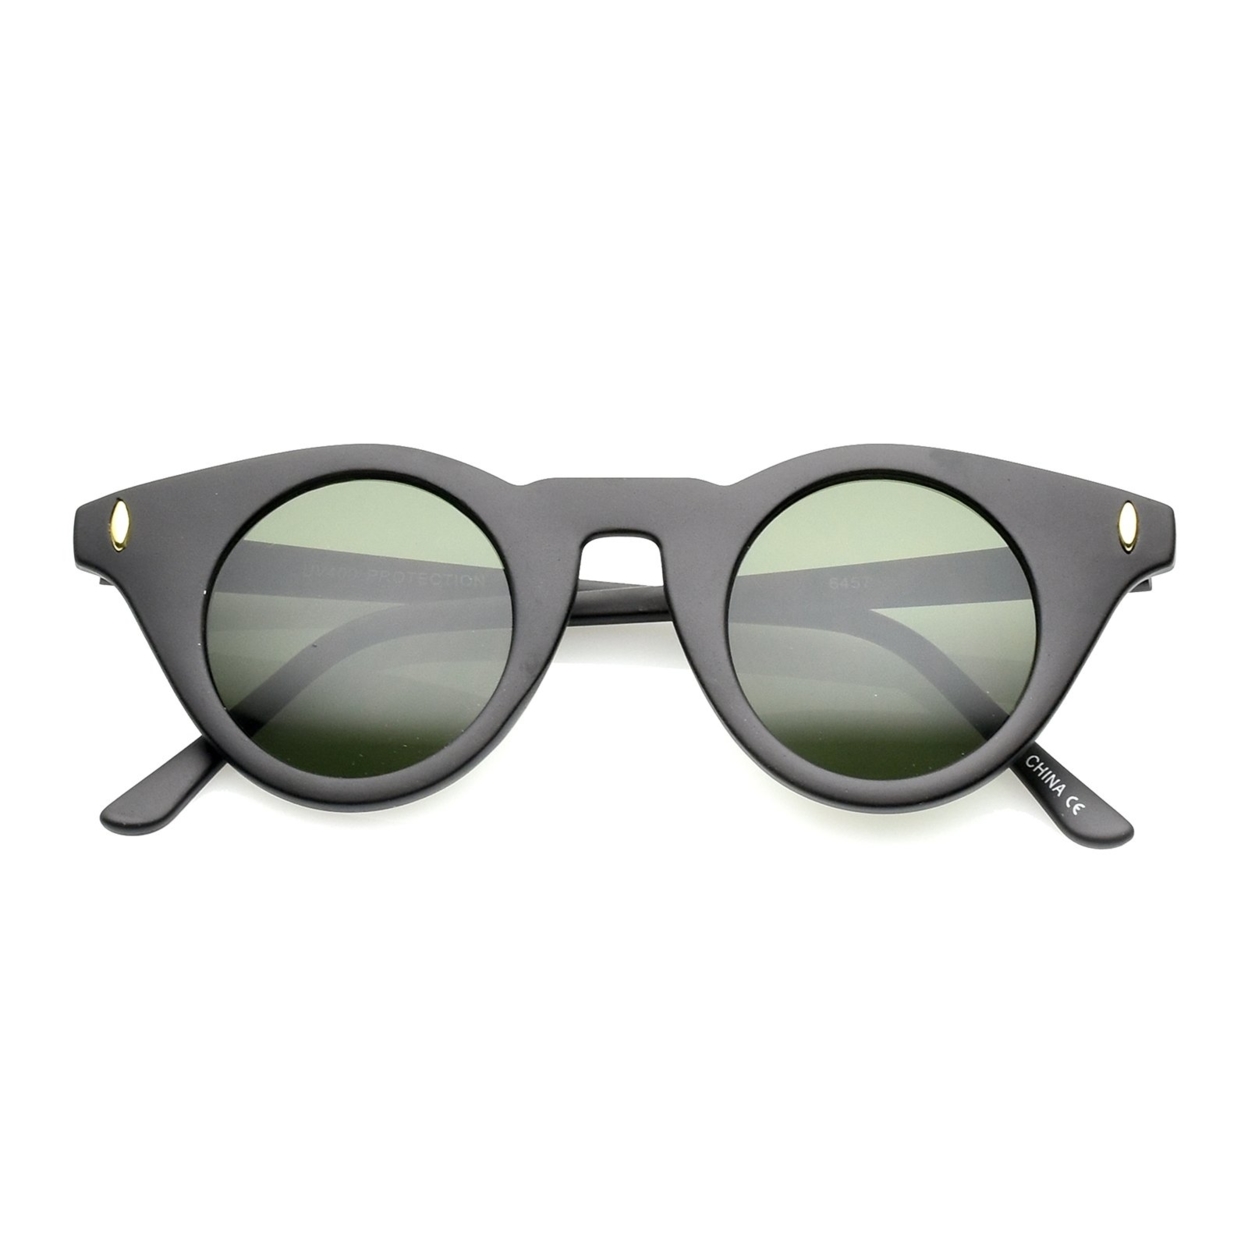 Women's Small Slim Temple Flat Round Lens Cat Eye Sunglasses 39mm - Matte Black / Green